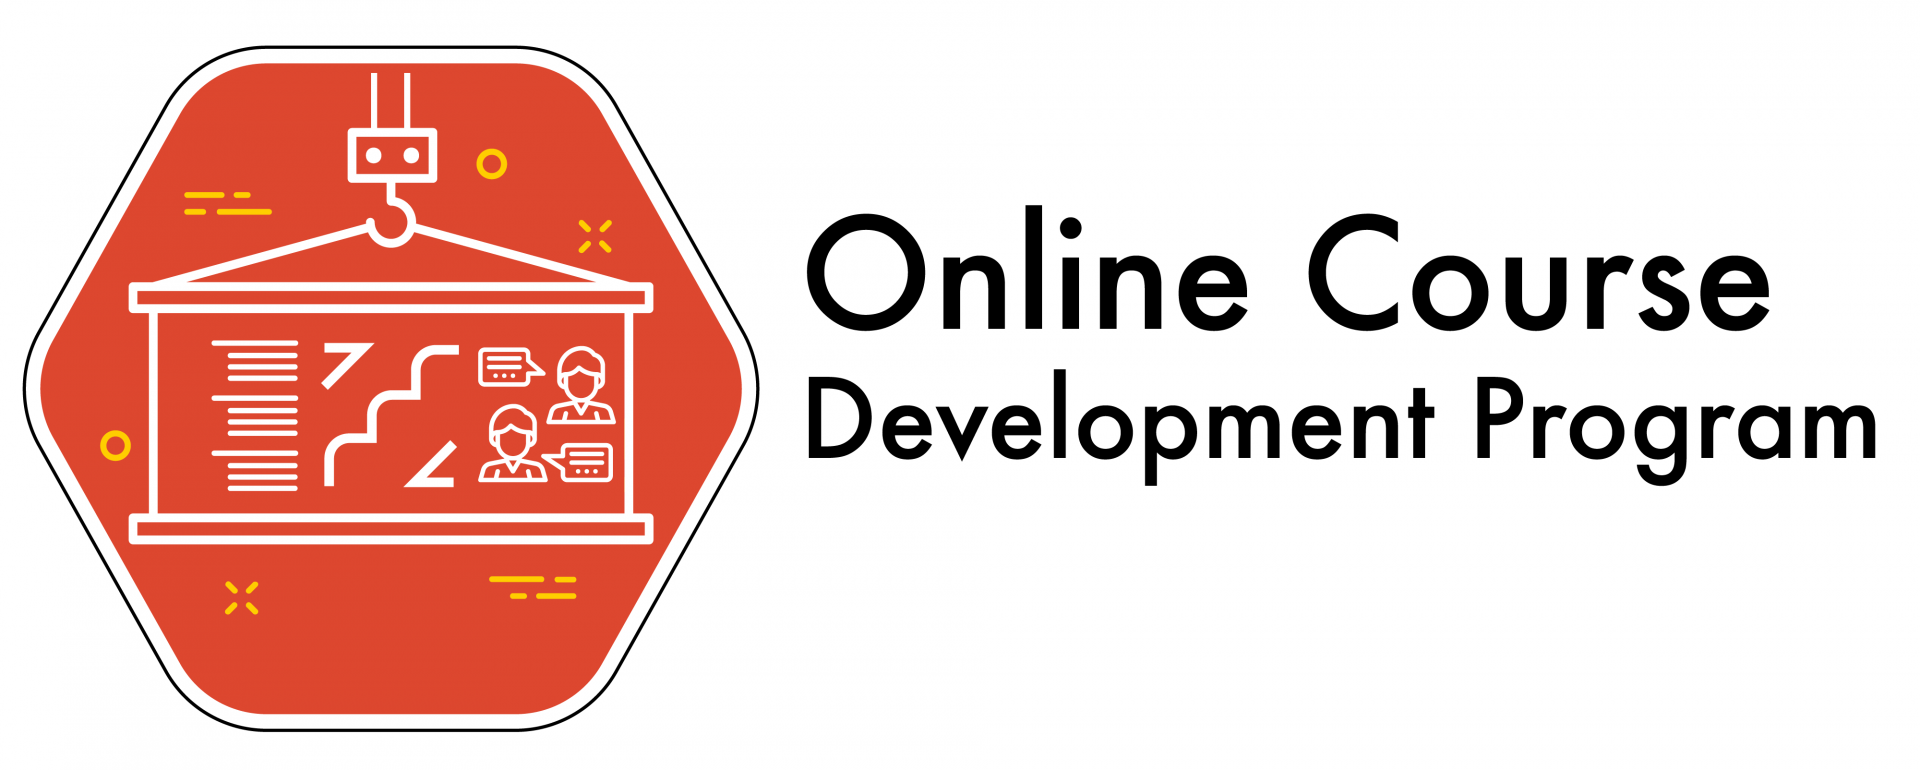 Online Course Development Program